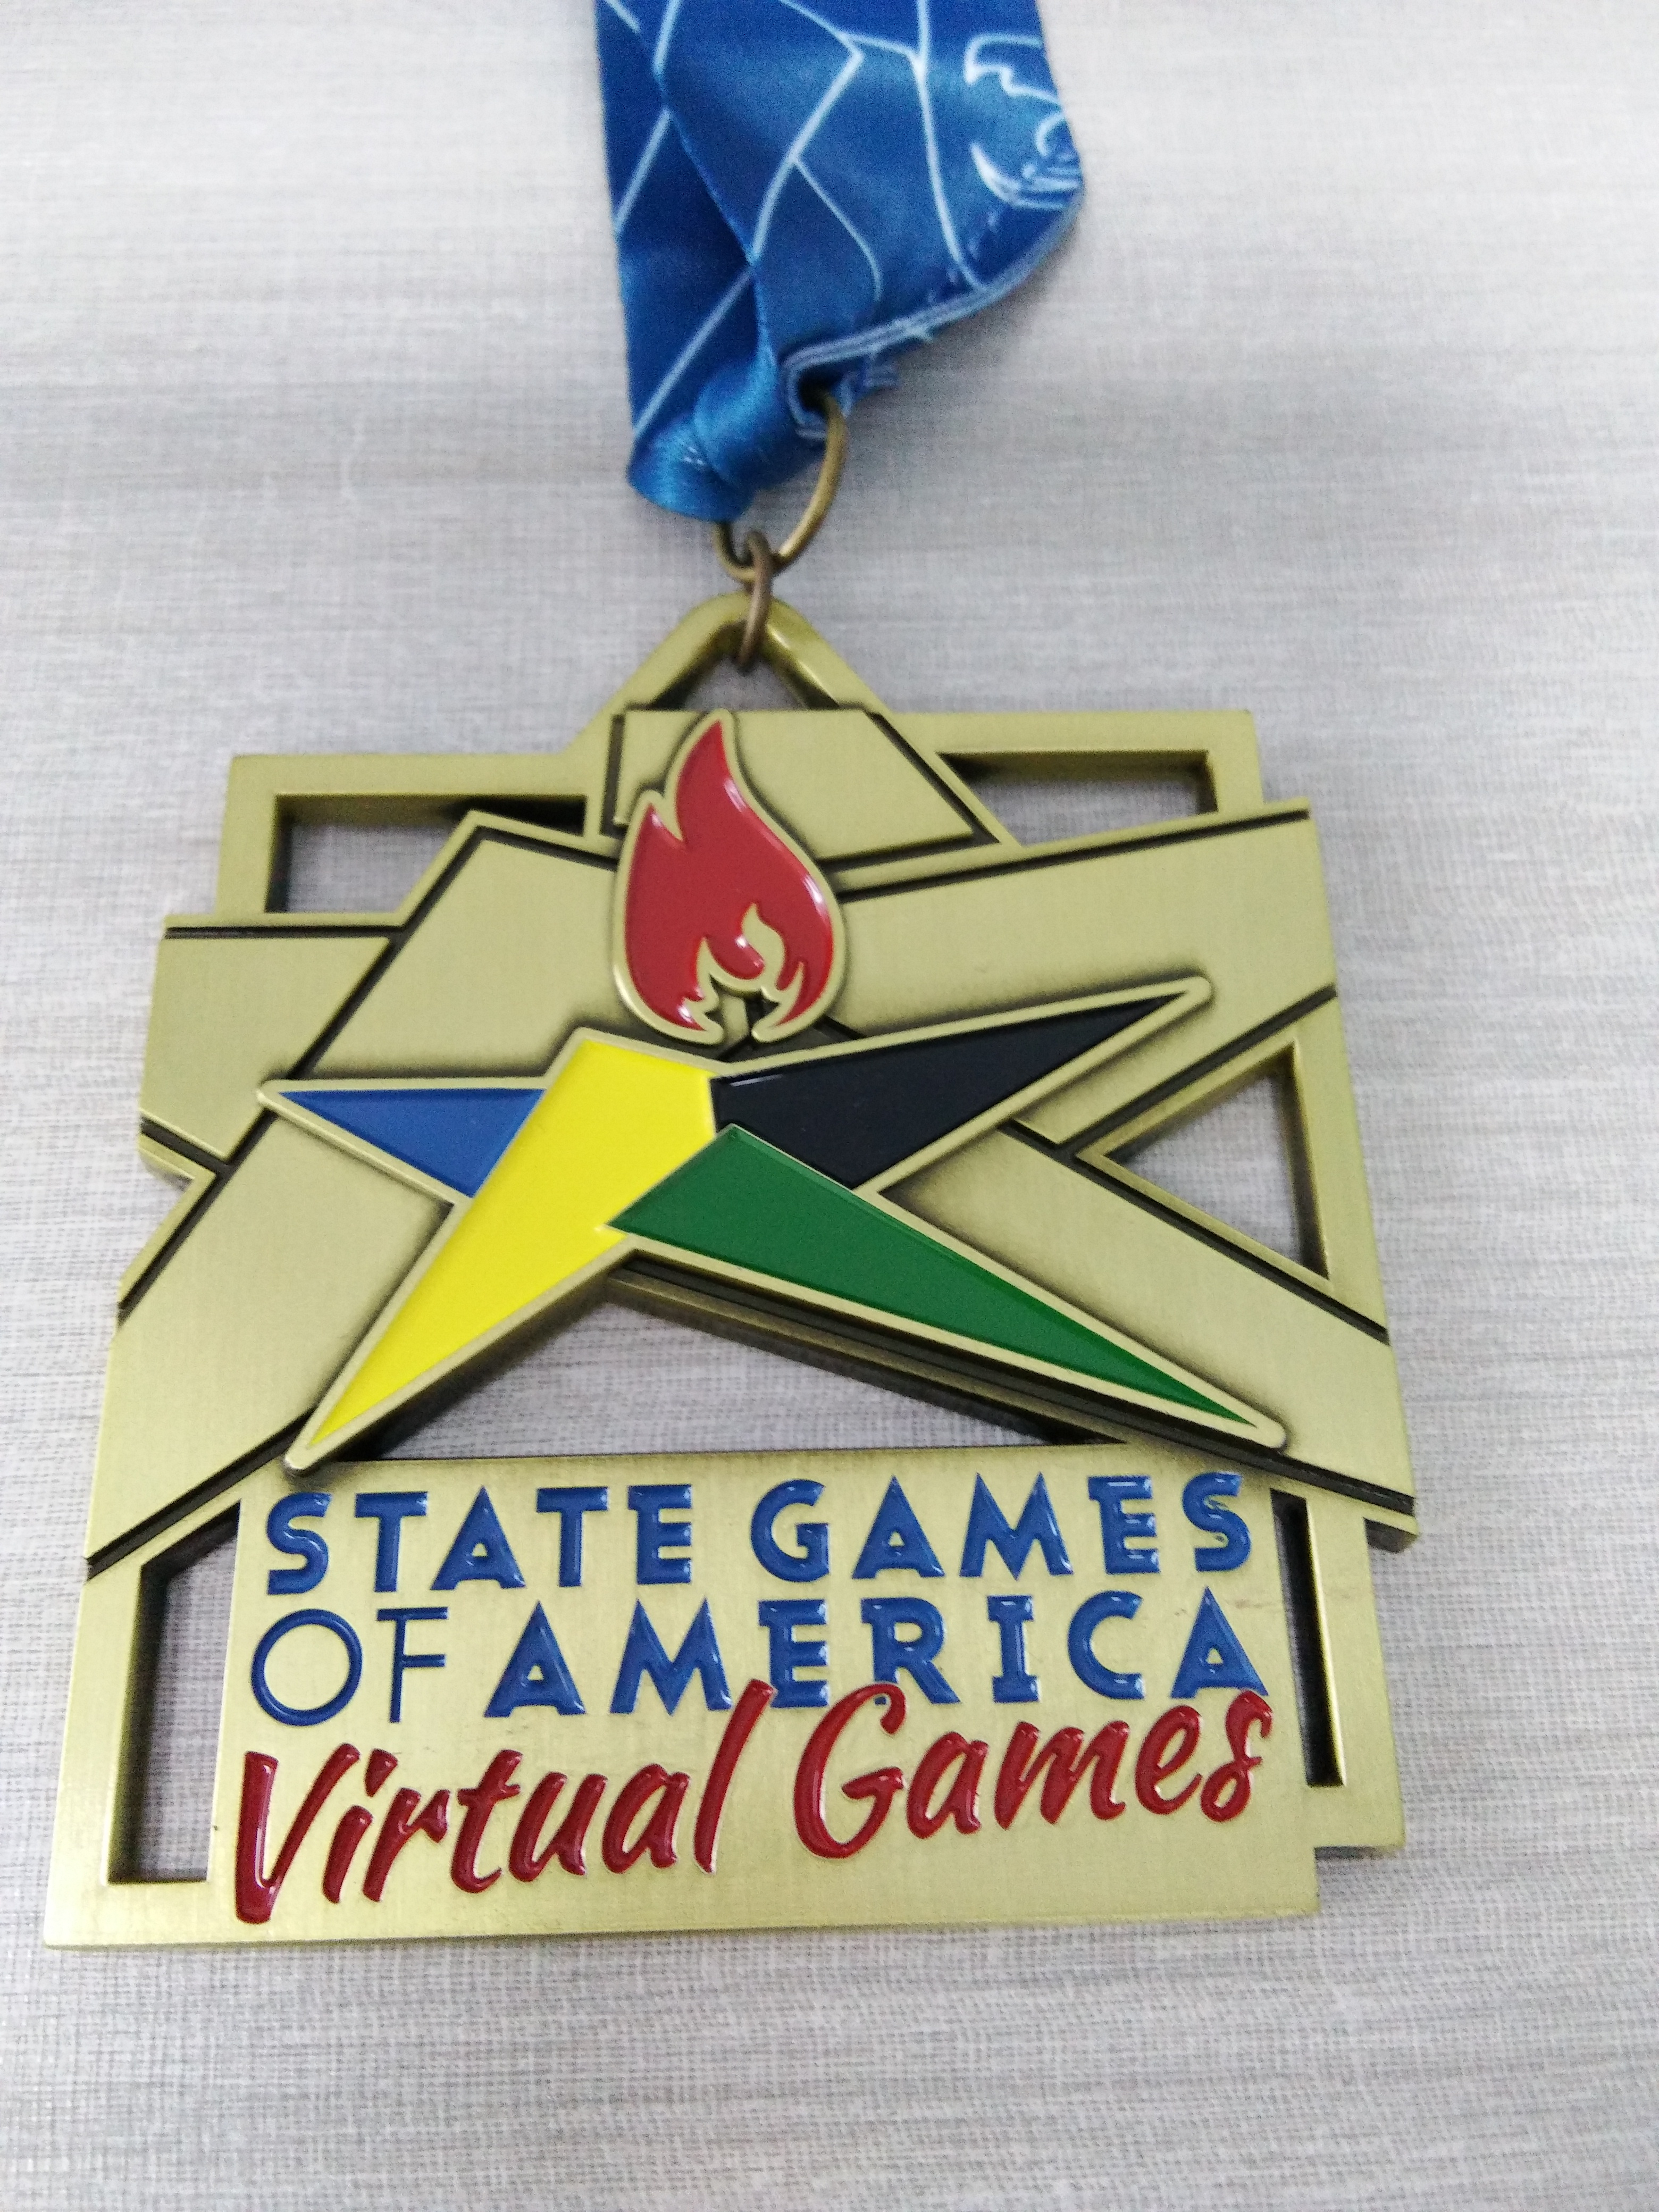 Virtual Games medal